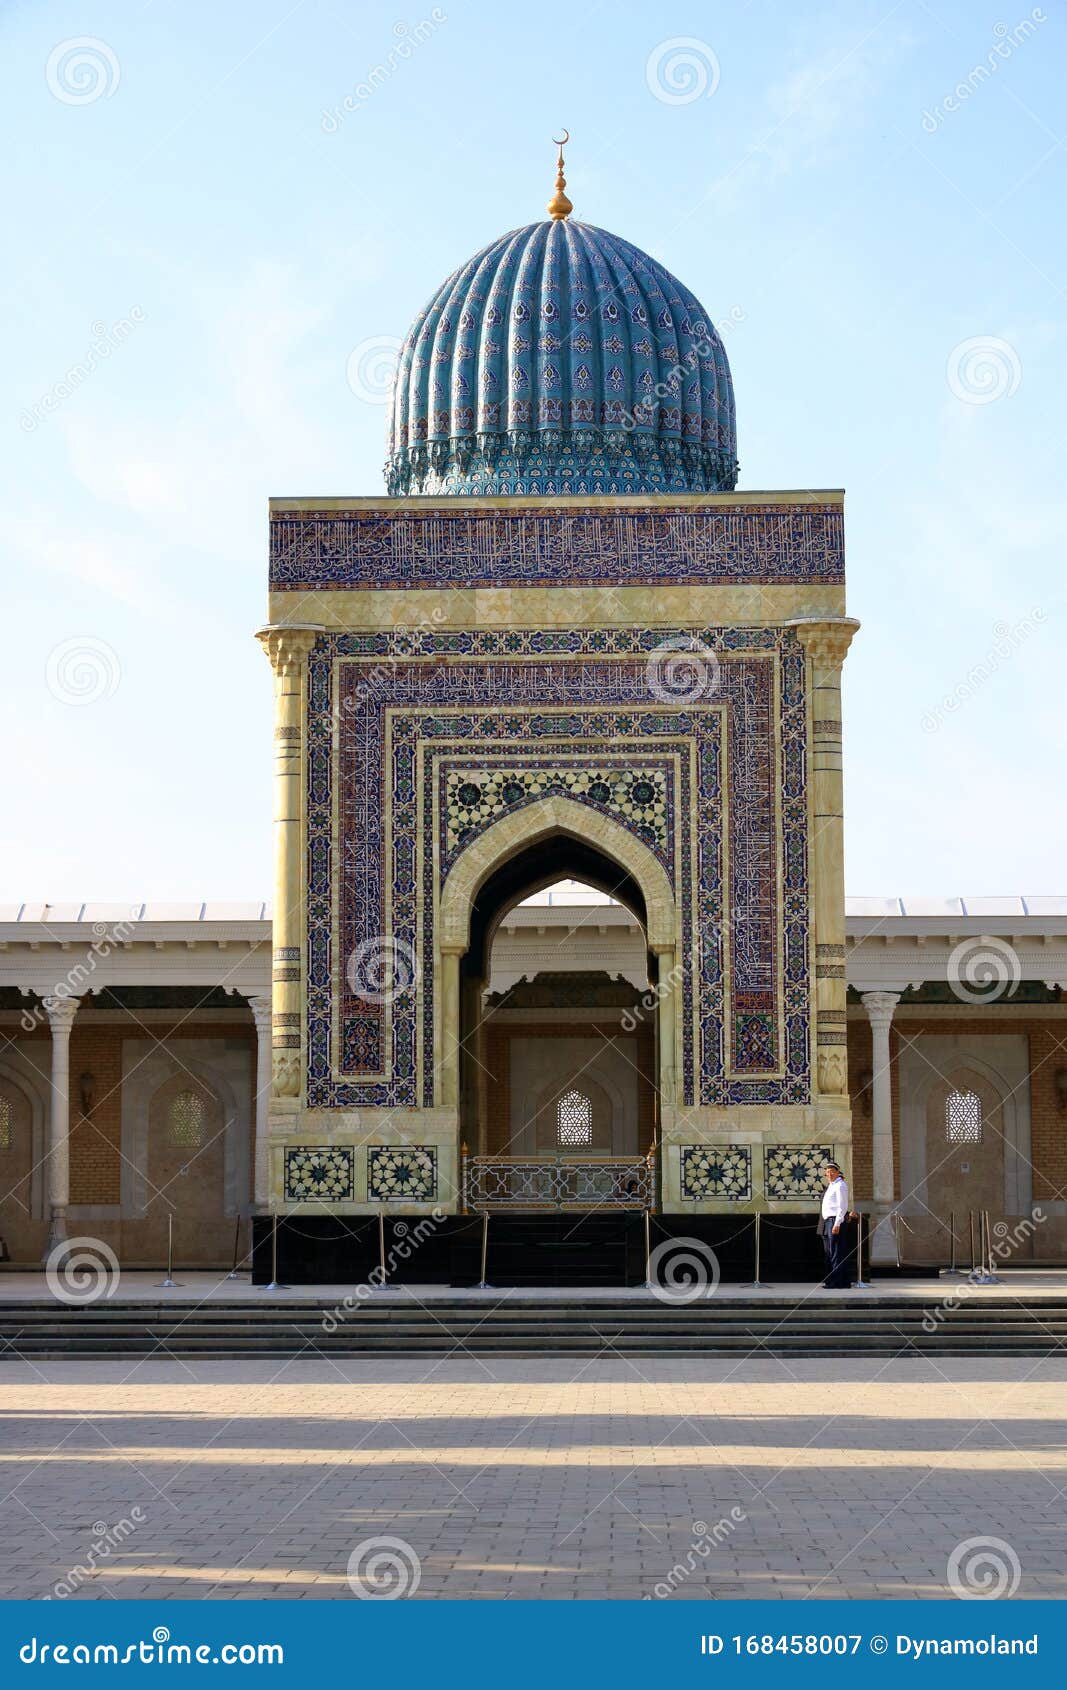 Turquoise Dome The Portal The Mausoleum Of Imam Al Bukhari In Samarkand Uzbekistan Editorial Photography Image Of Complex Architecture 168458007